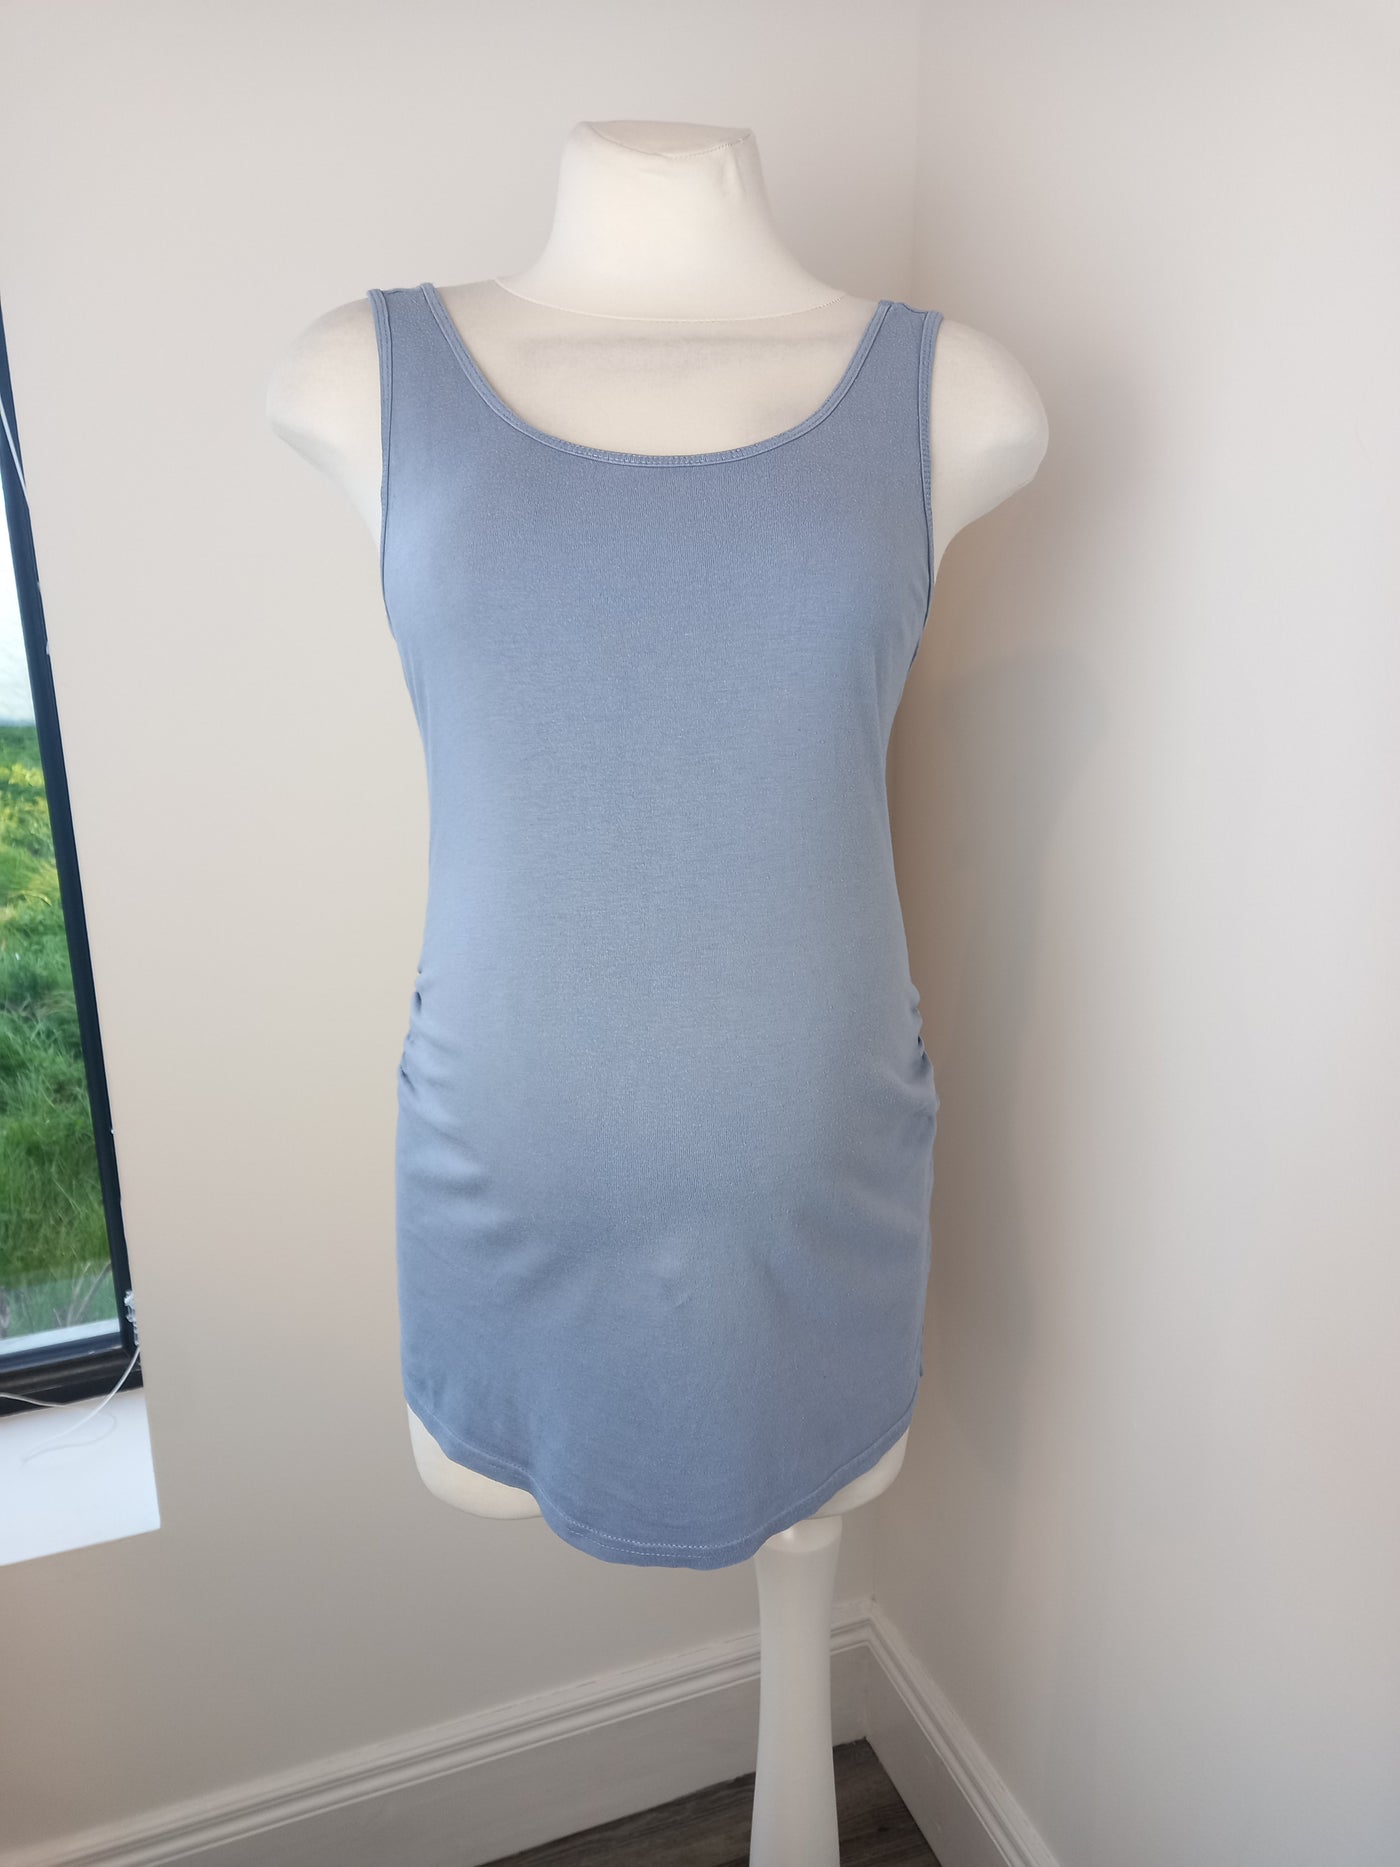 Asos Maternity light blue sleeveless top - Size 12